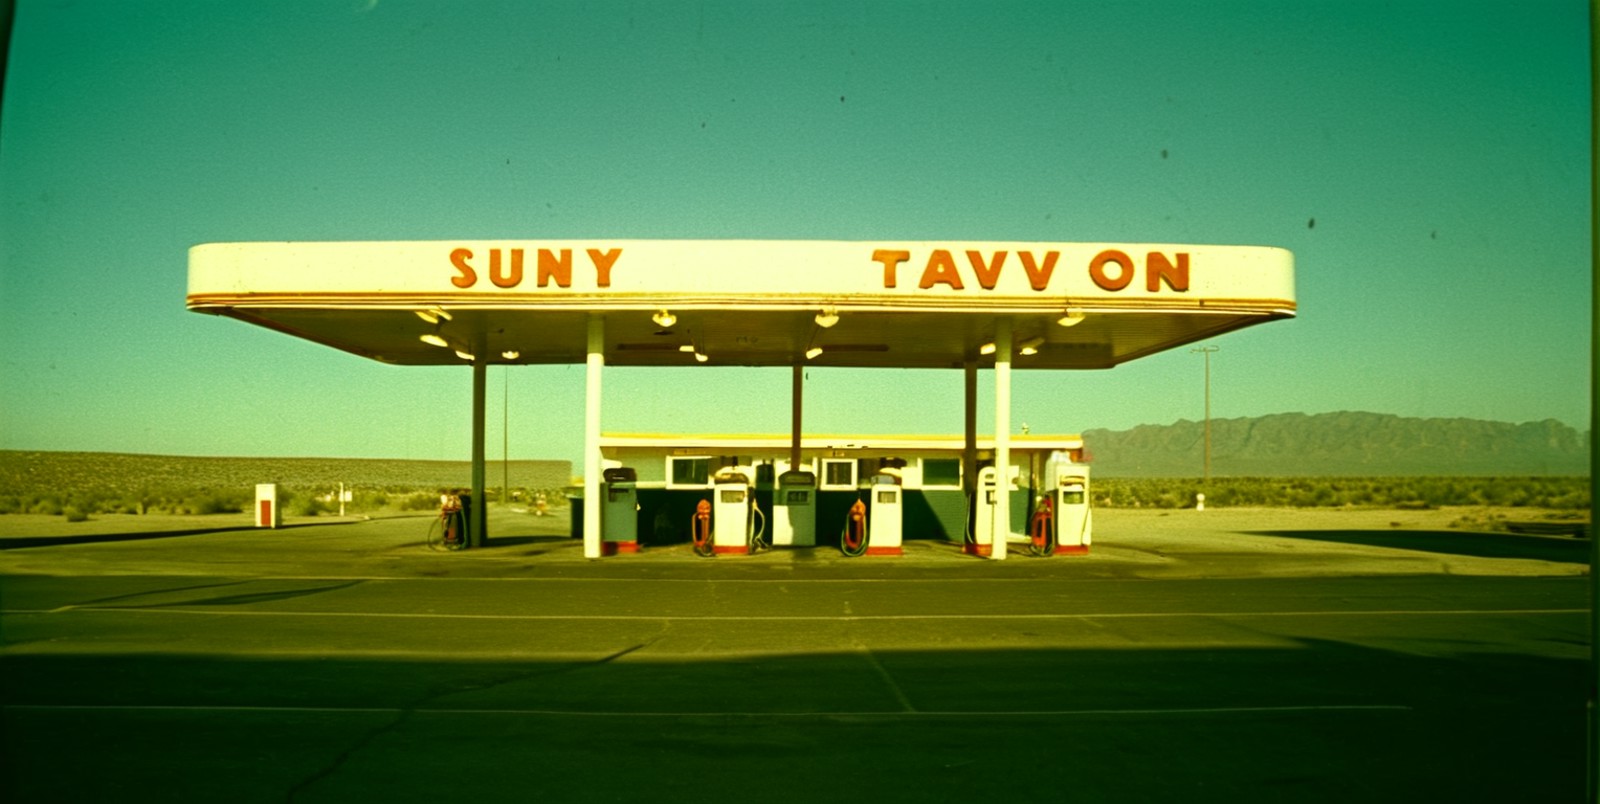 cinematic, 1980, classic, sunny, gas station, lights, happy, film grain, abandoned taven, Æ/22, Short telephoto focal len...